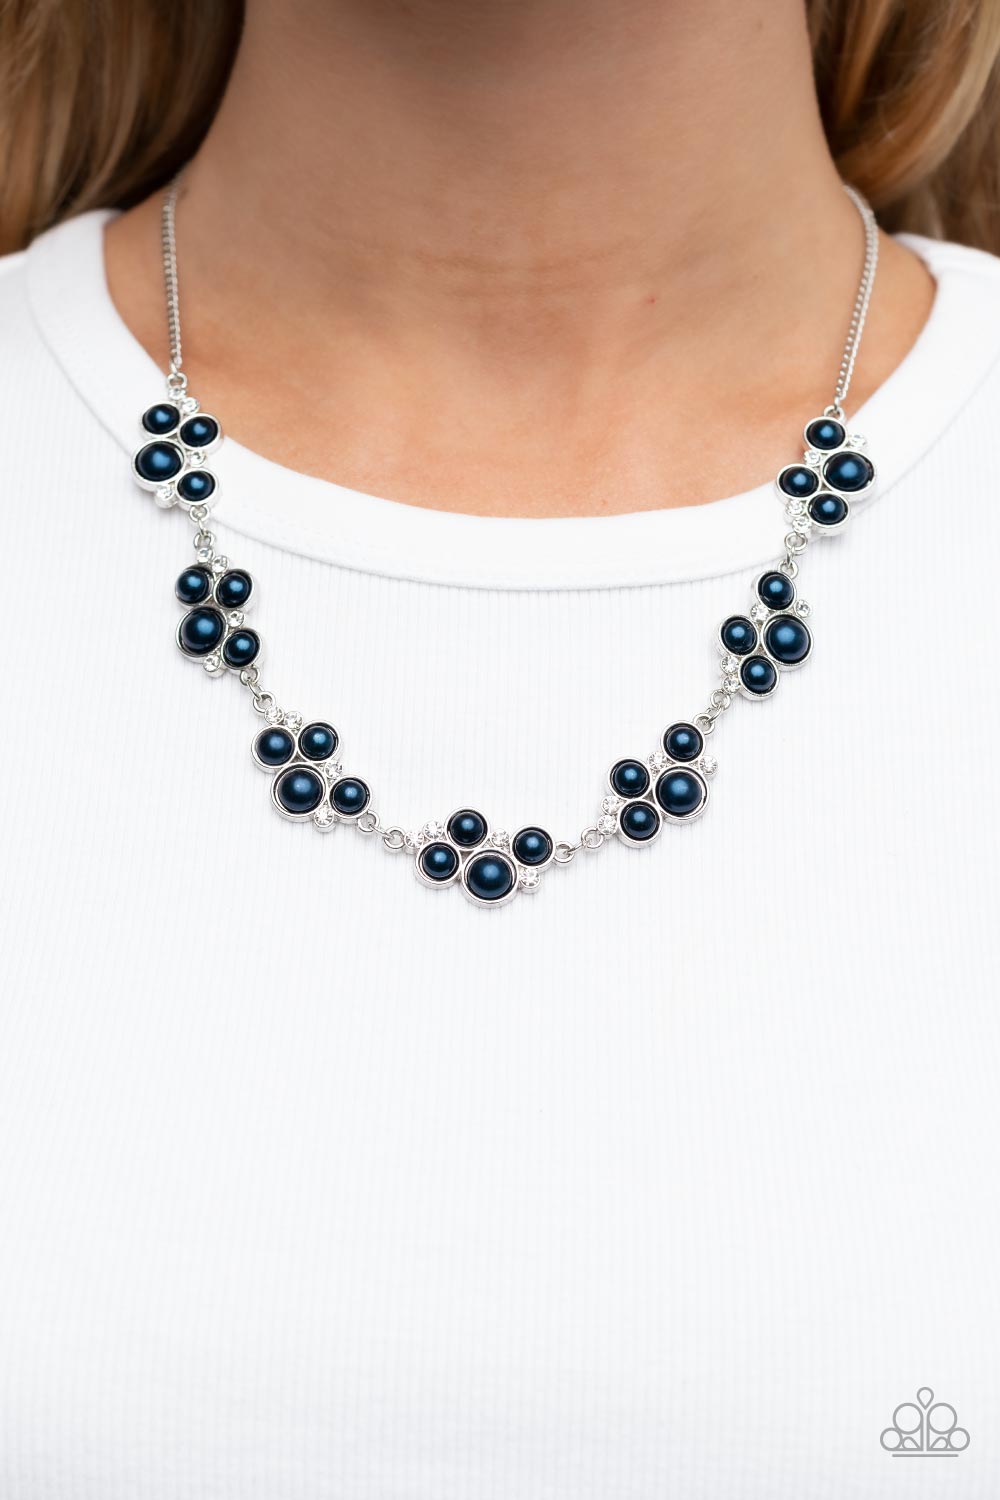 Paparazzi “GRACE to the Top” Blue Necklace Earring Set - Cindysblingboutique